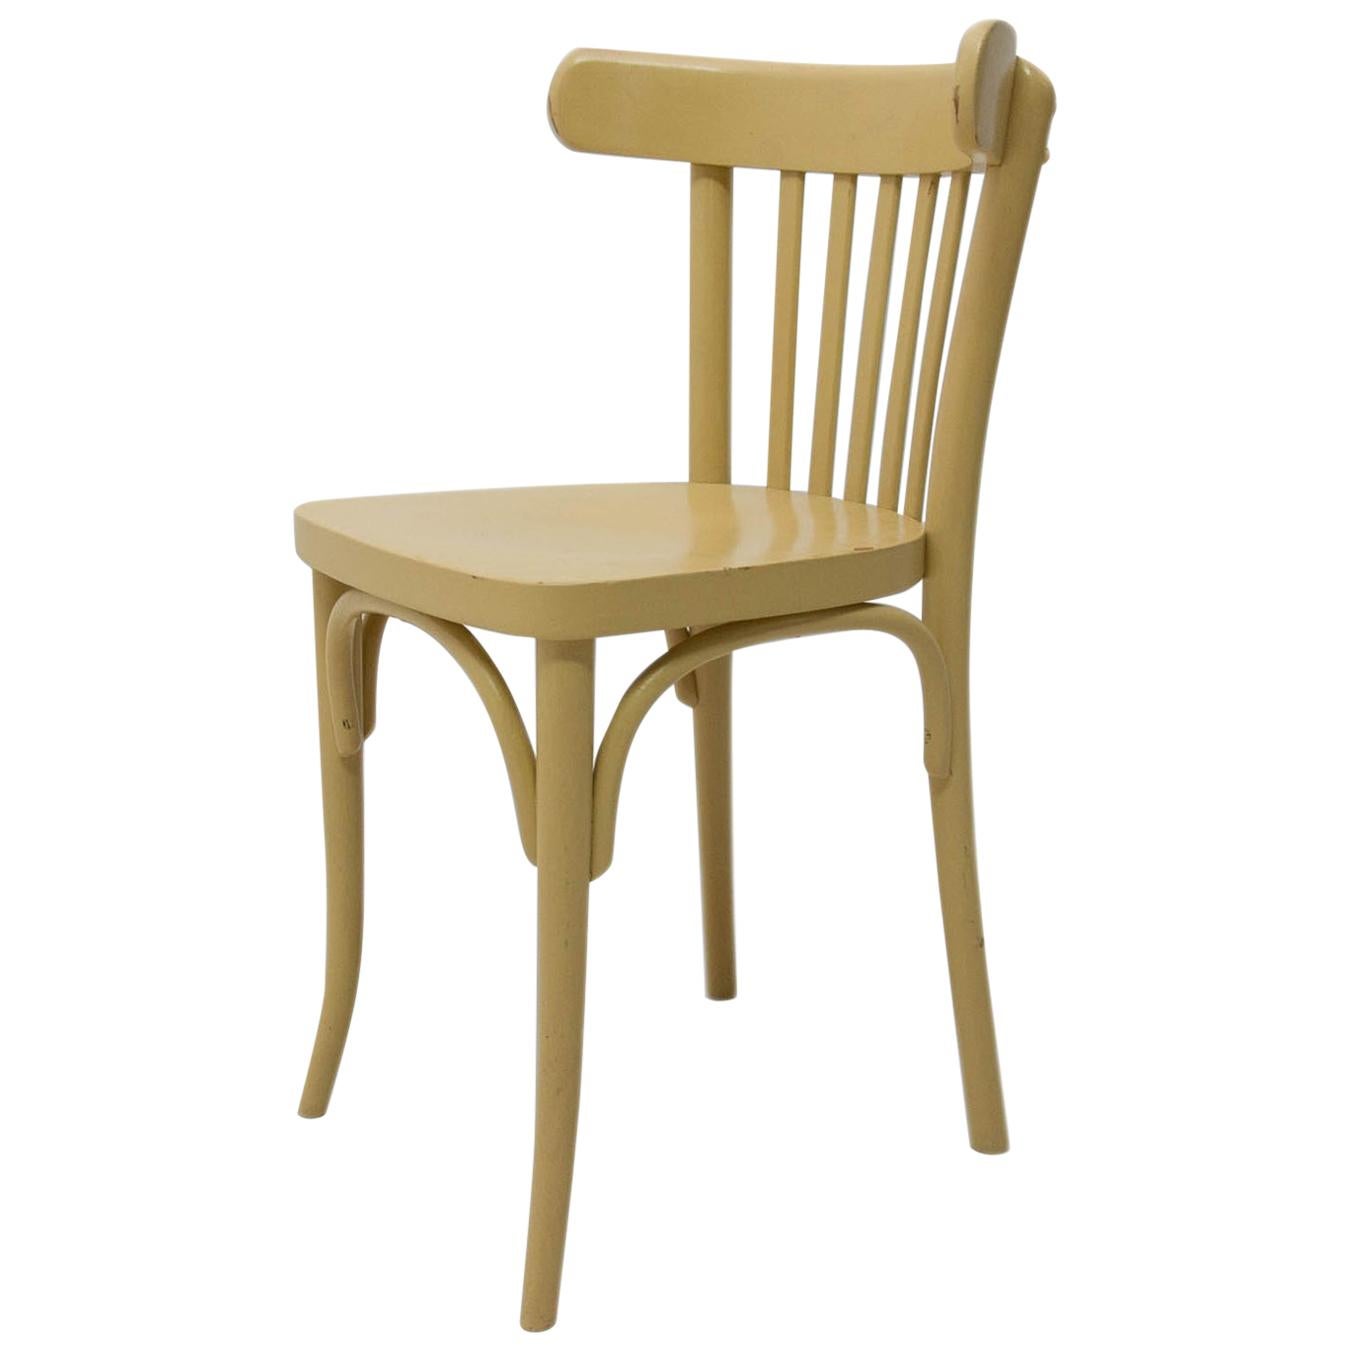 Beech Bentwood Chair from Thonet, 1950s